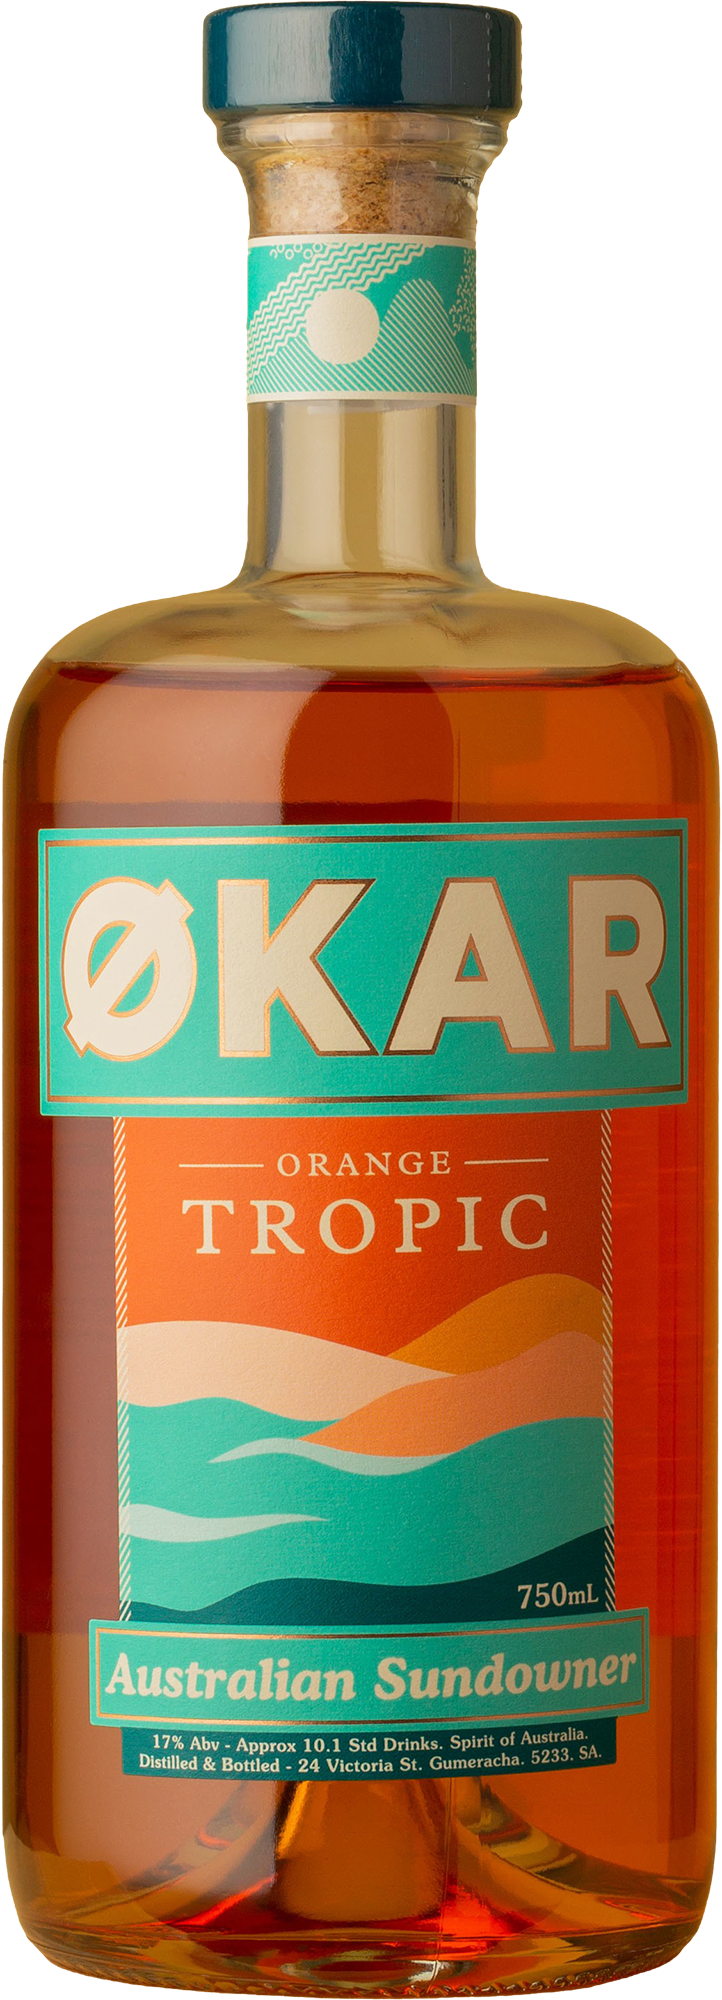 Økar - Orange Tropic Australian Sundowner 700mL Not Wine